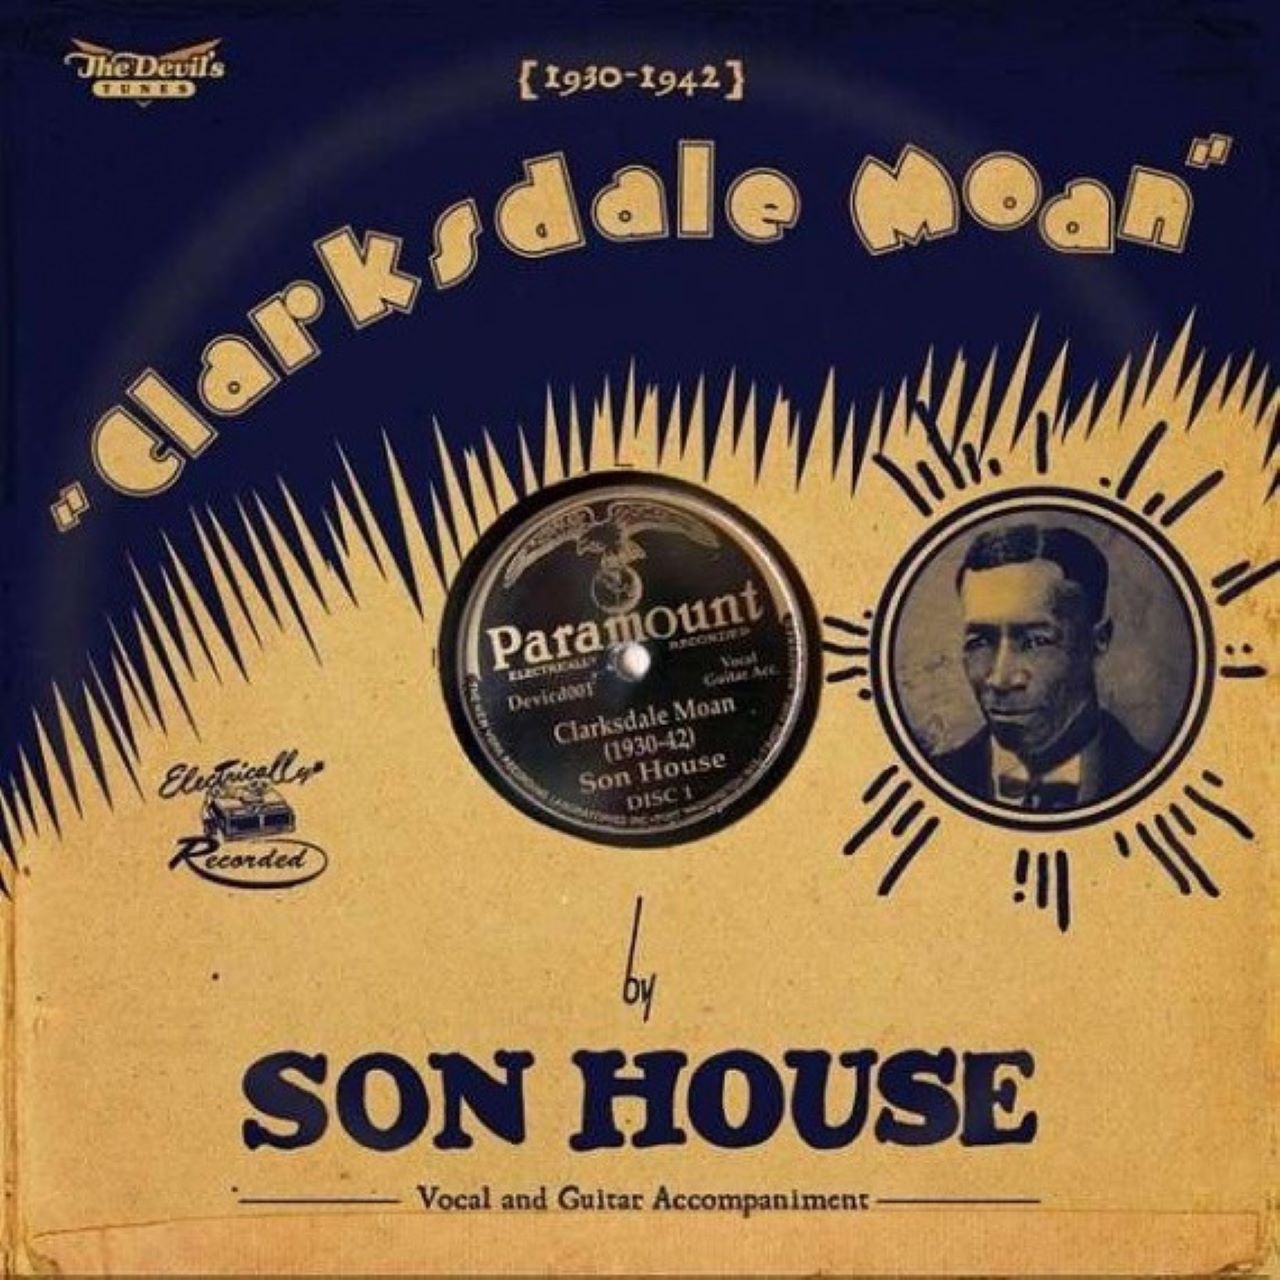 Son House - Clarksdale Moan 1930-42 cover album